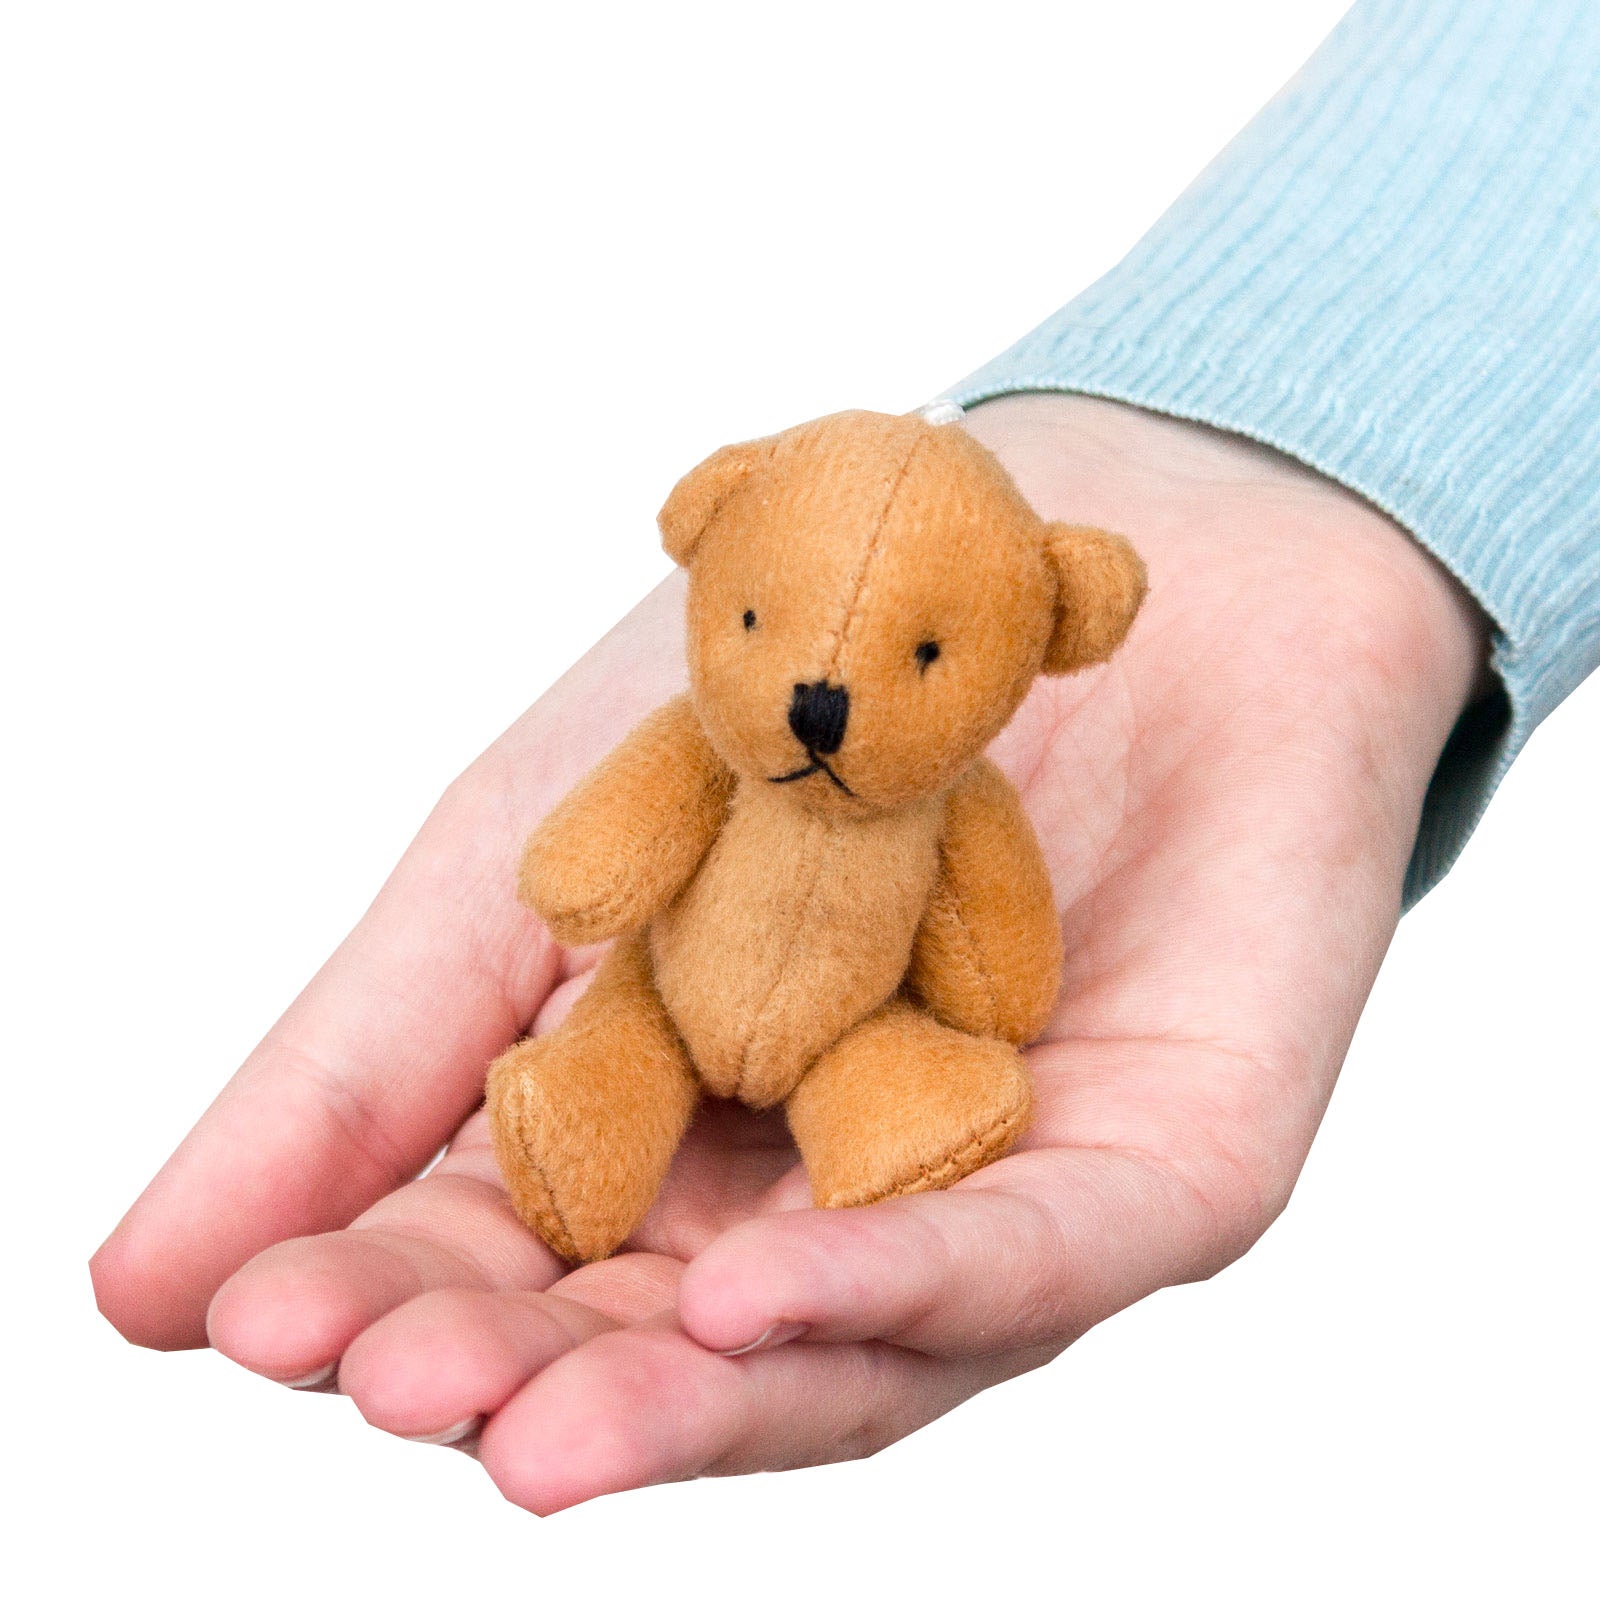 Small BROWN Teddy Bears X 40 - Cute Soft Adorable